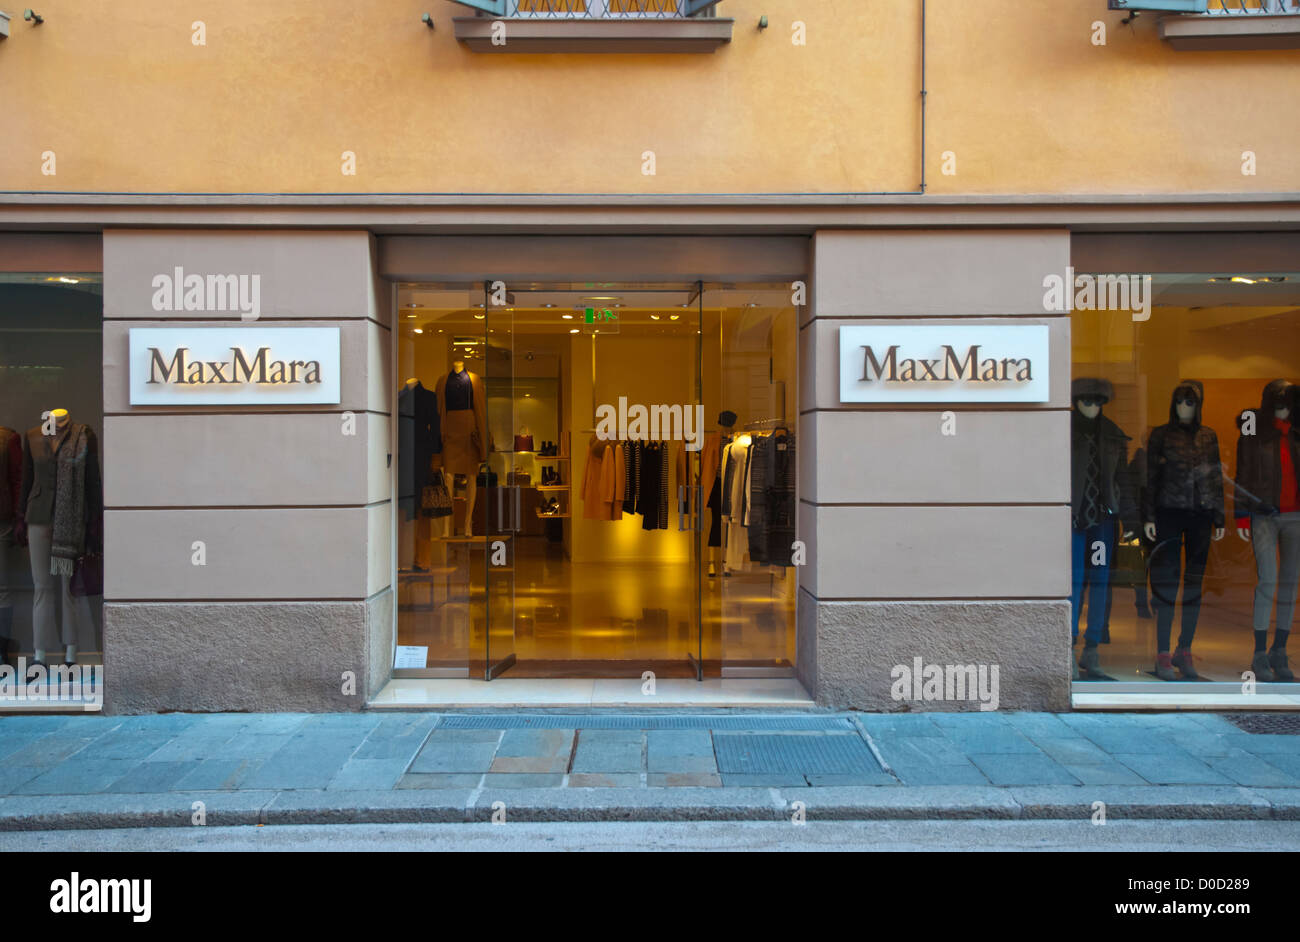 MaxMara fashion shop originates in Reggio Emilia city Emilia-Romagna region  northern Italy Europe Stock Photo - Alamy